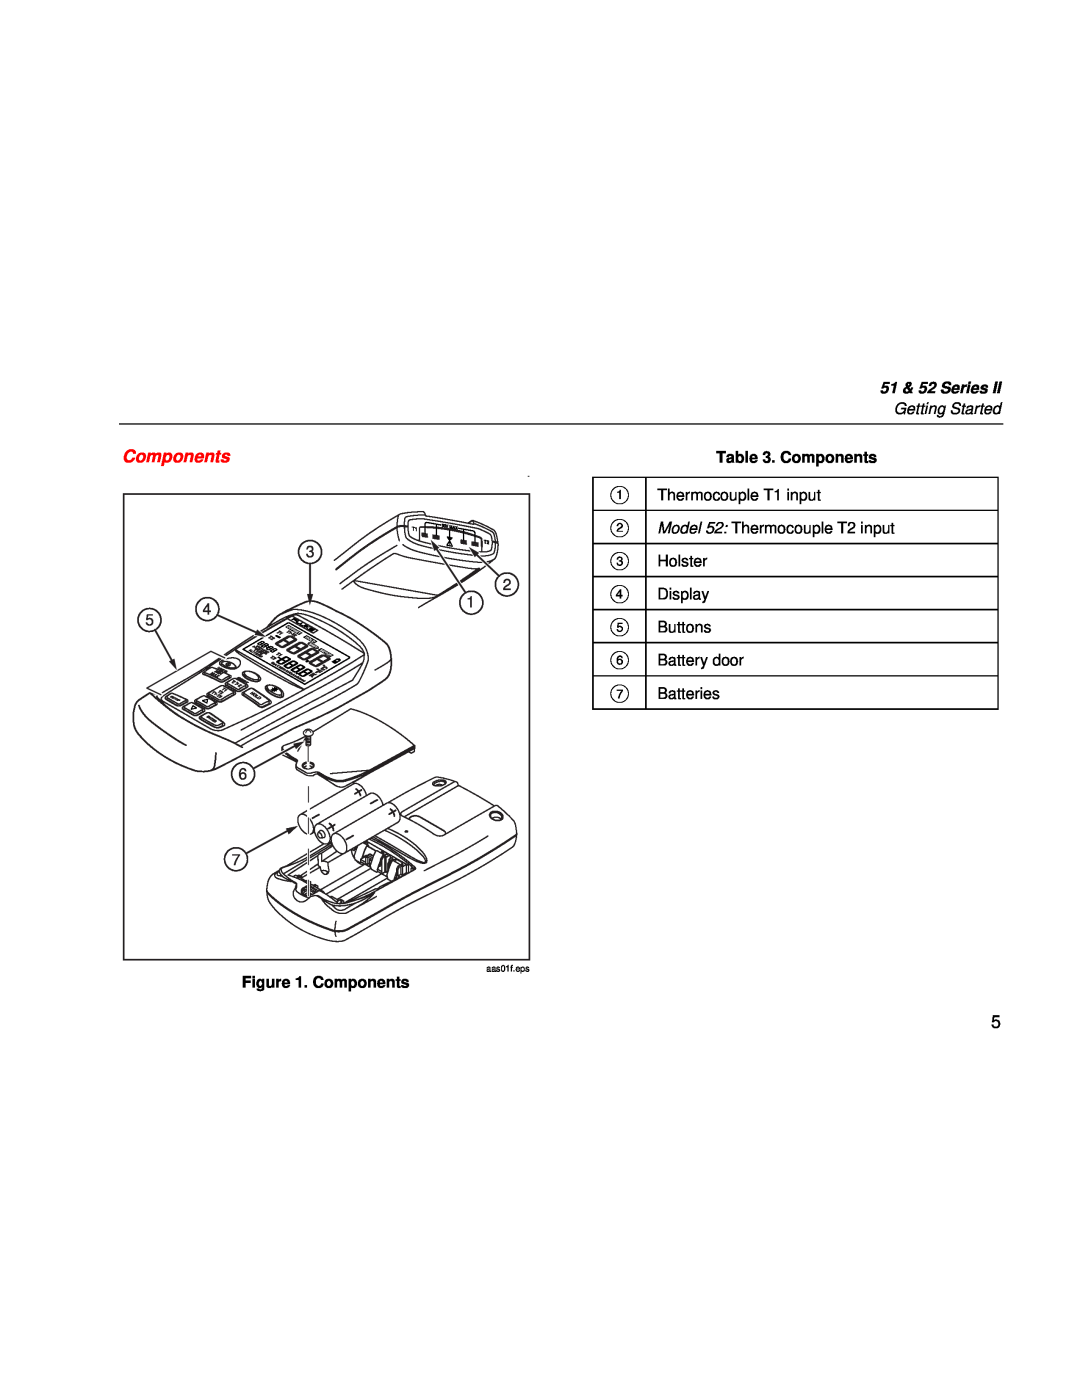 Fluke 51 Series user manual Components, A B C D E F G, 51 & 52 Series, aas01f.eps 